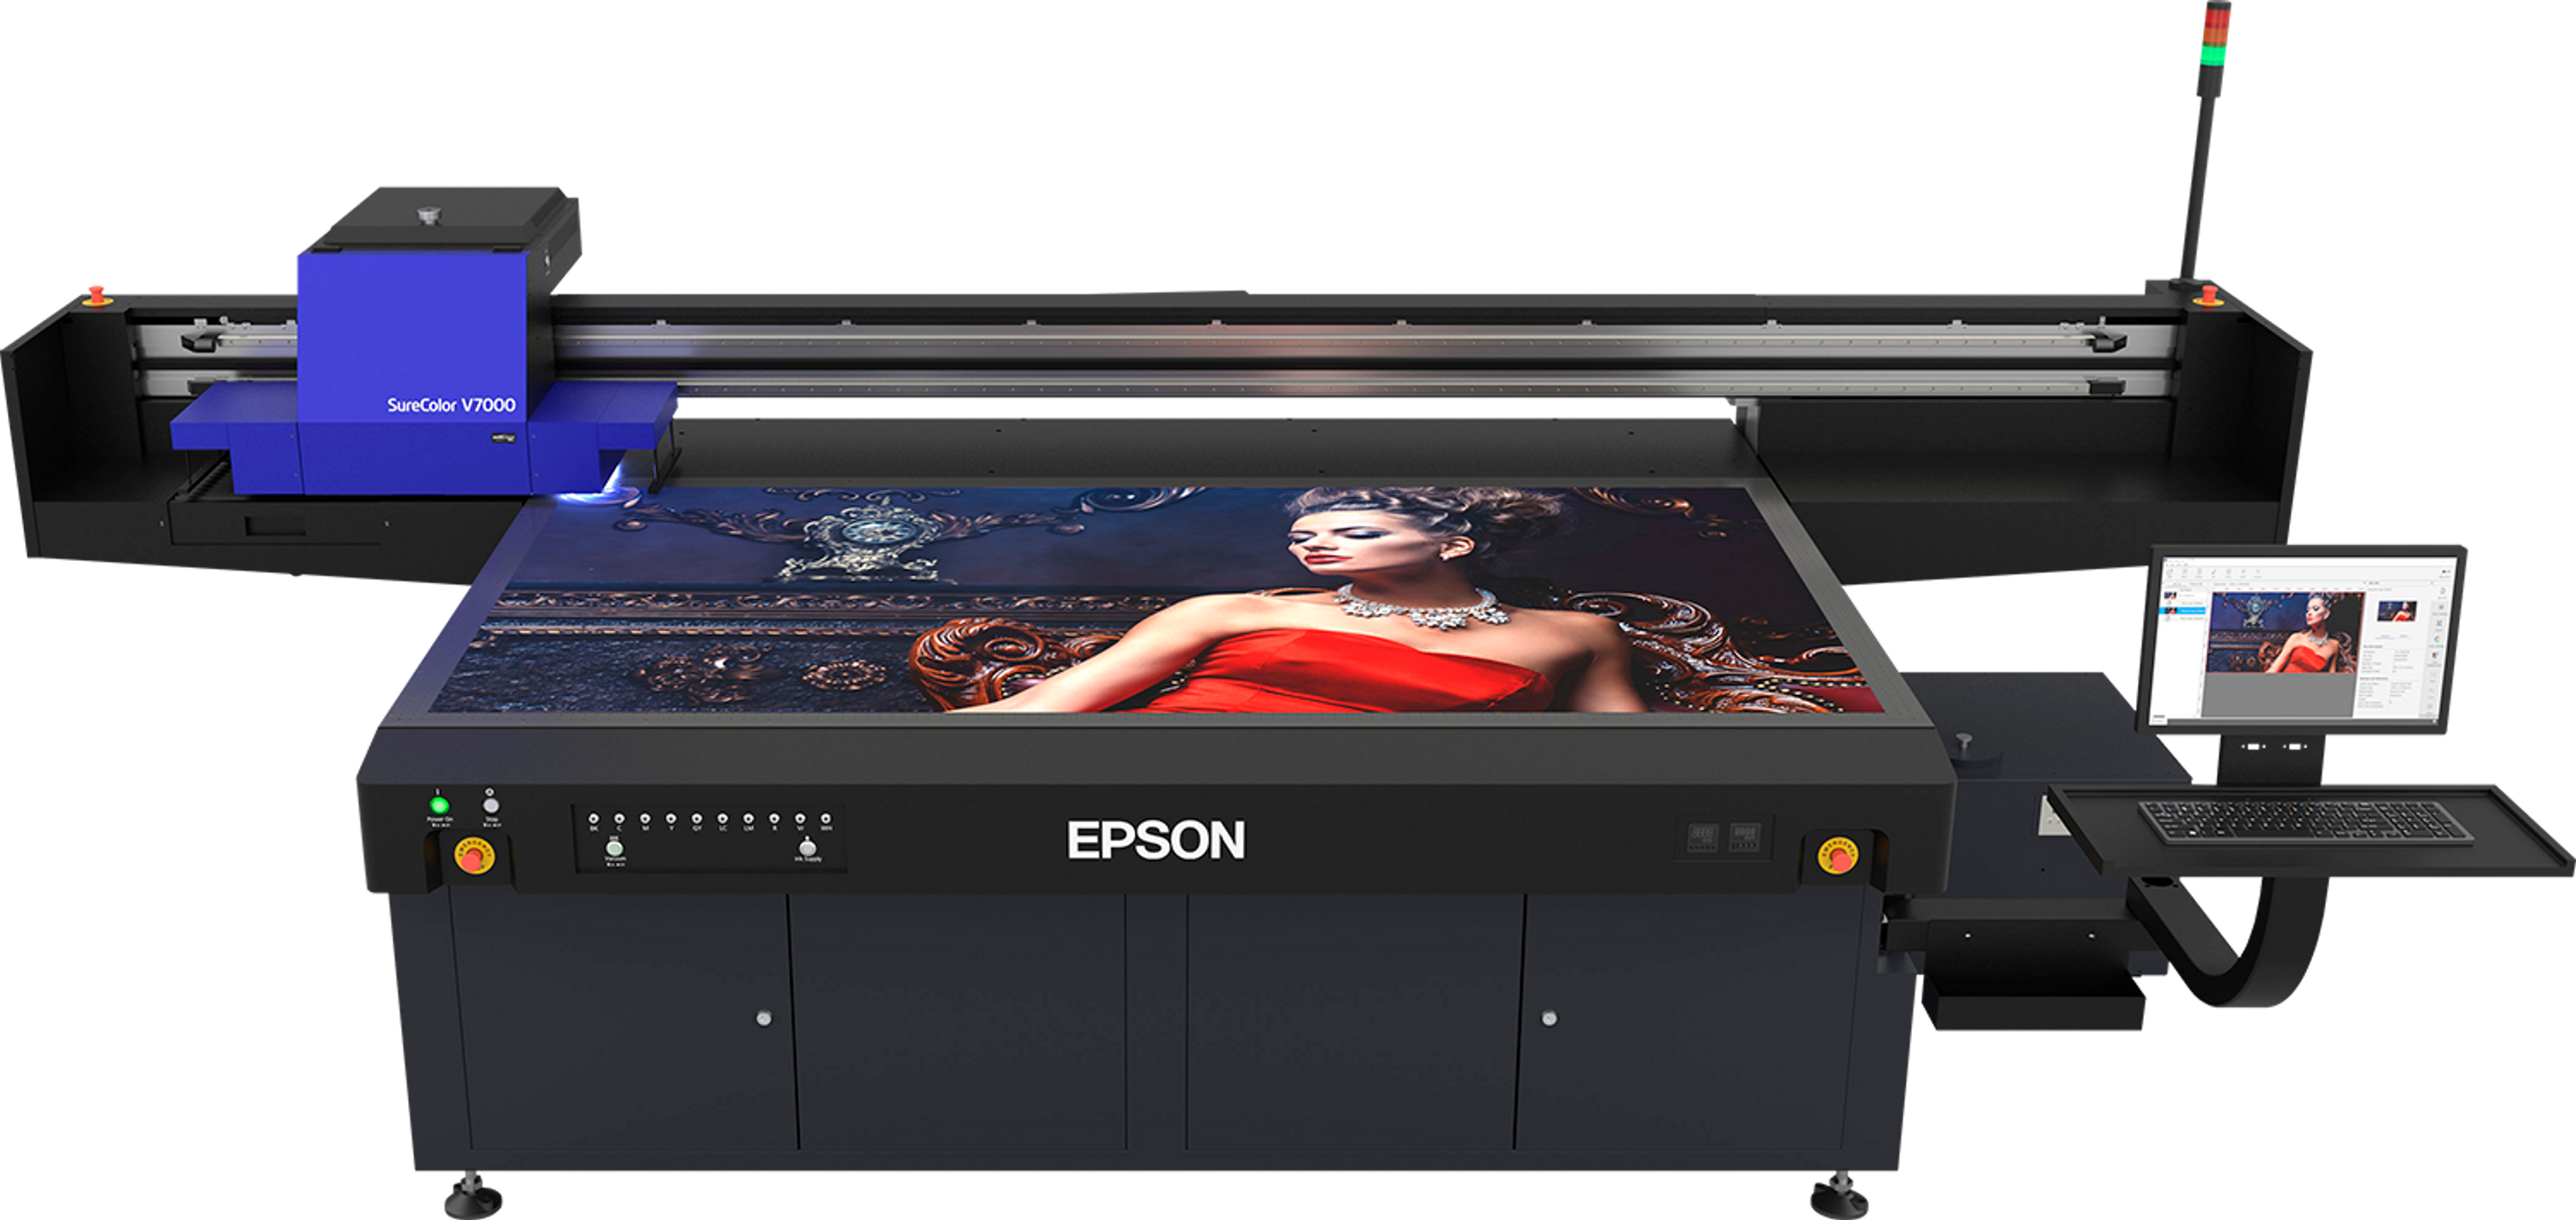 EPSON SureColor SC-V7000